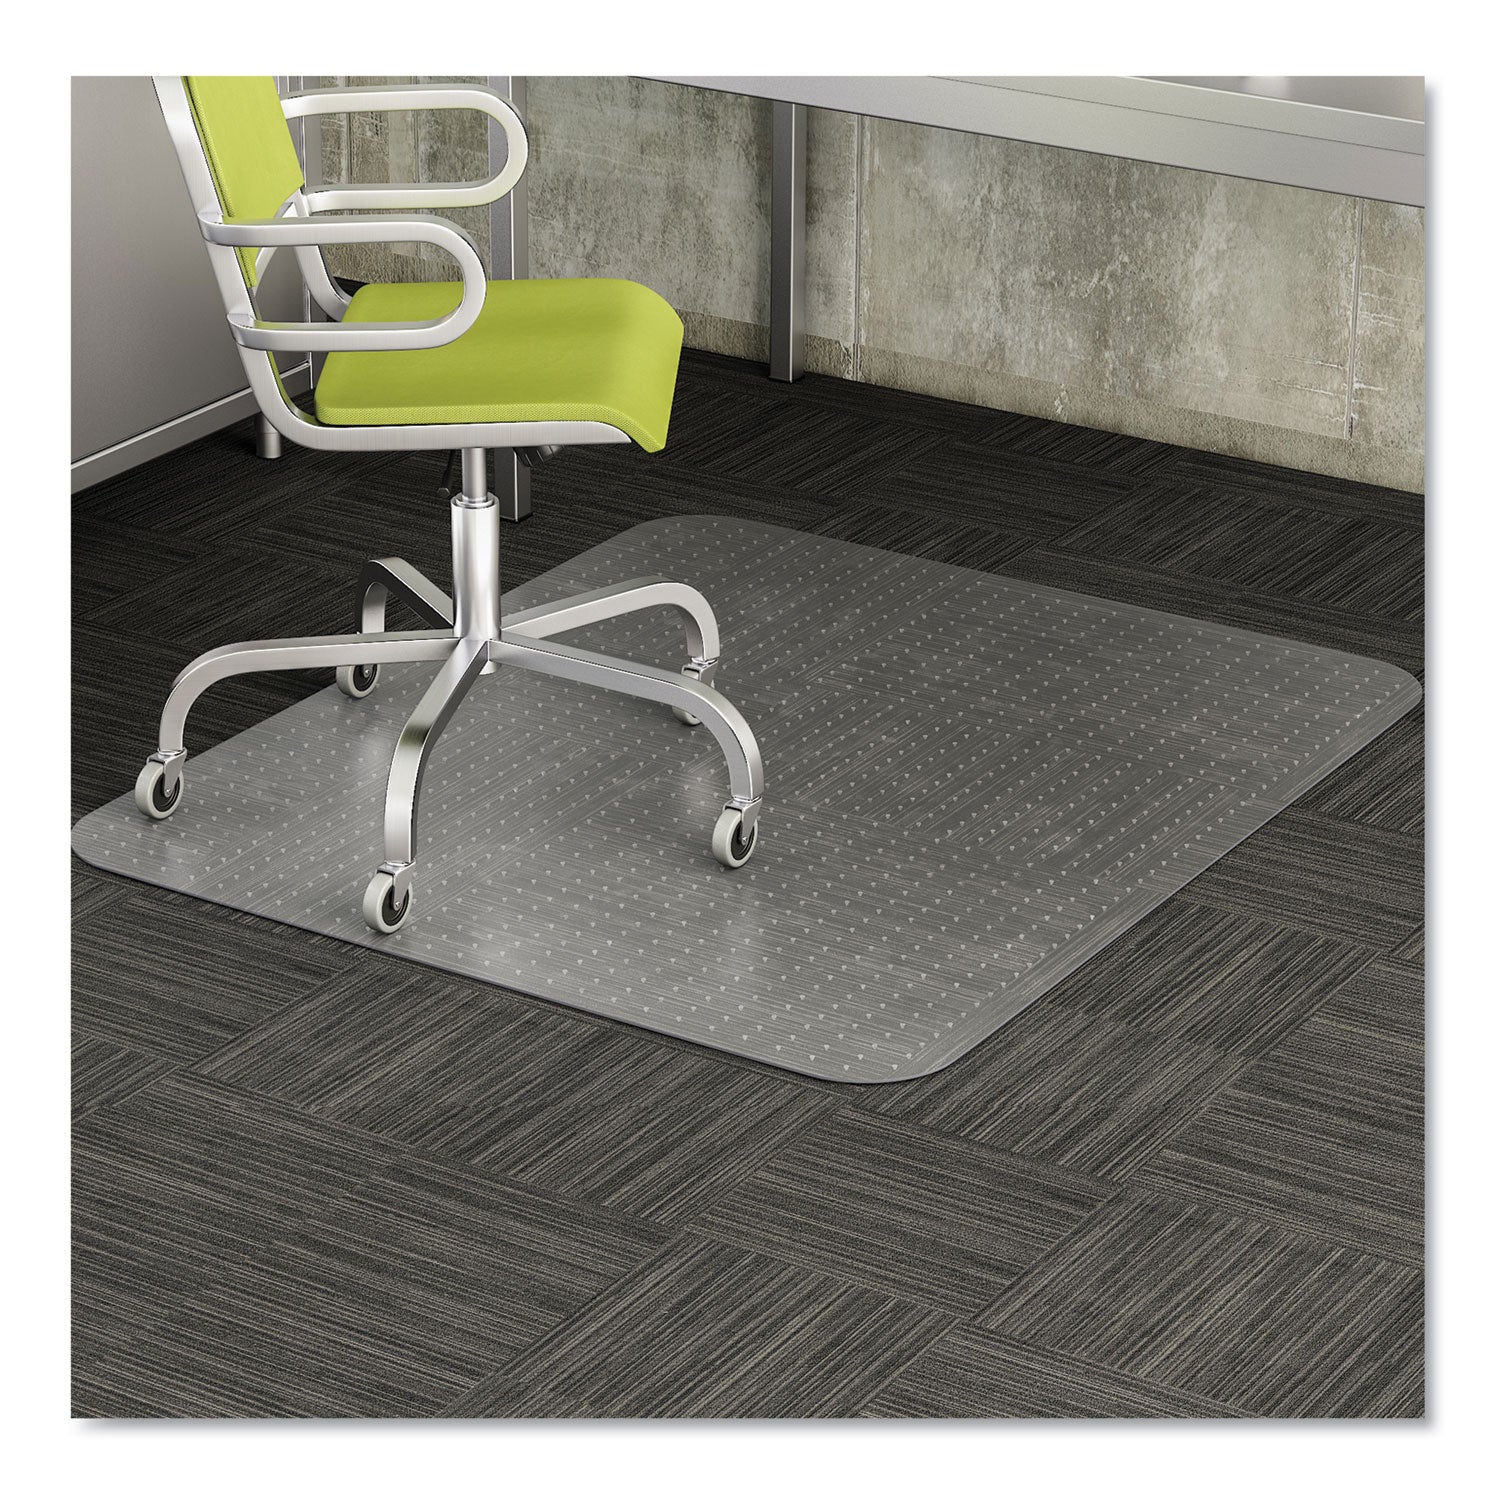 economat-occasional-use-chair-mat-for-low-pile-carpet-45-x-53-rectangular-clear_defcm11242com - 2